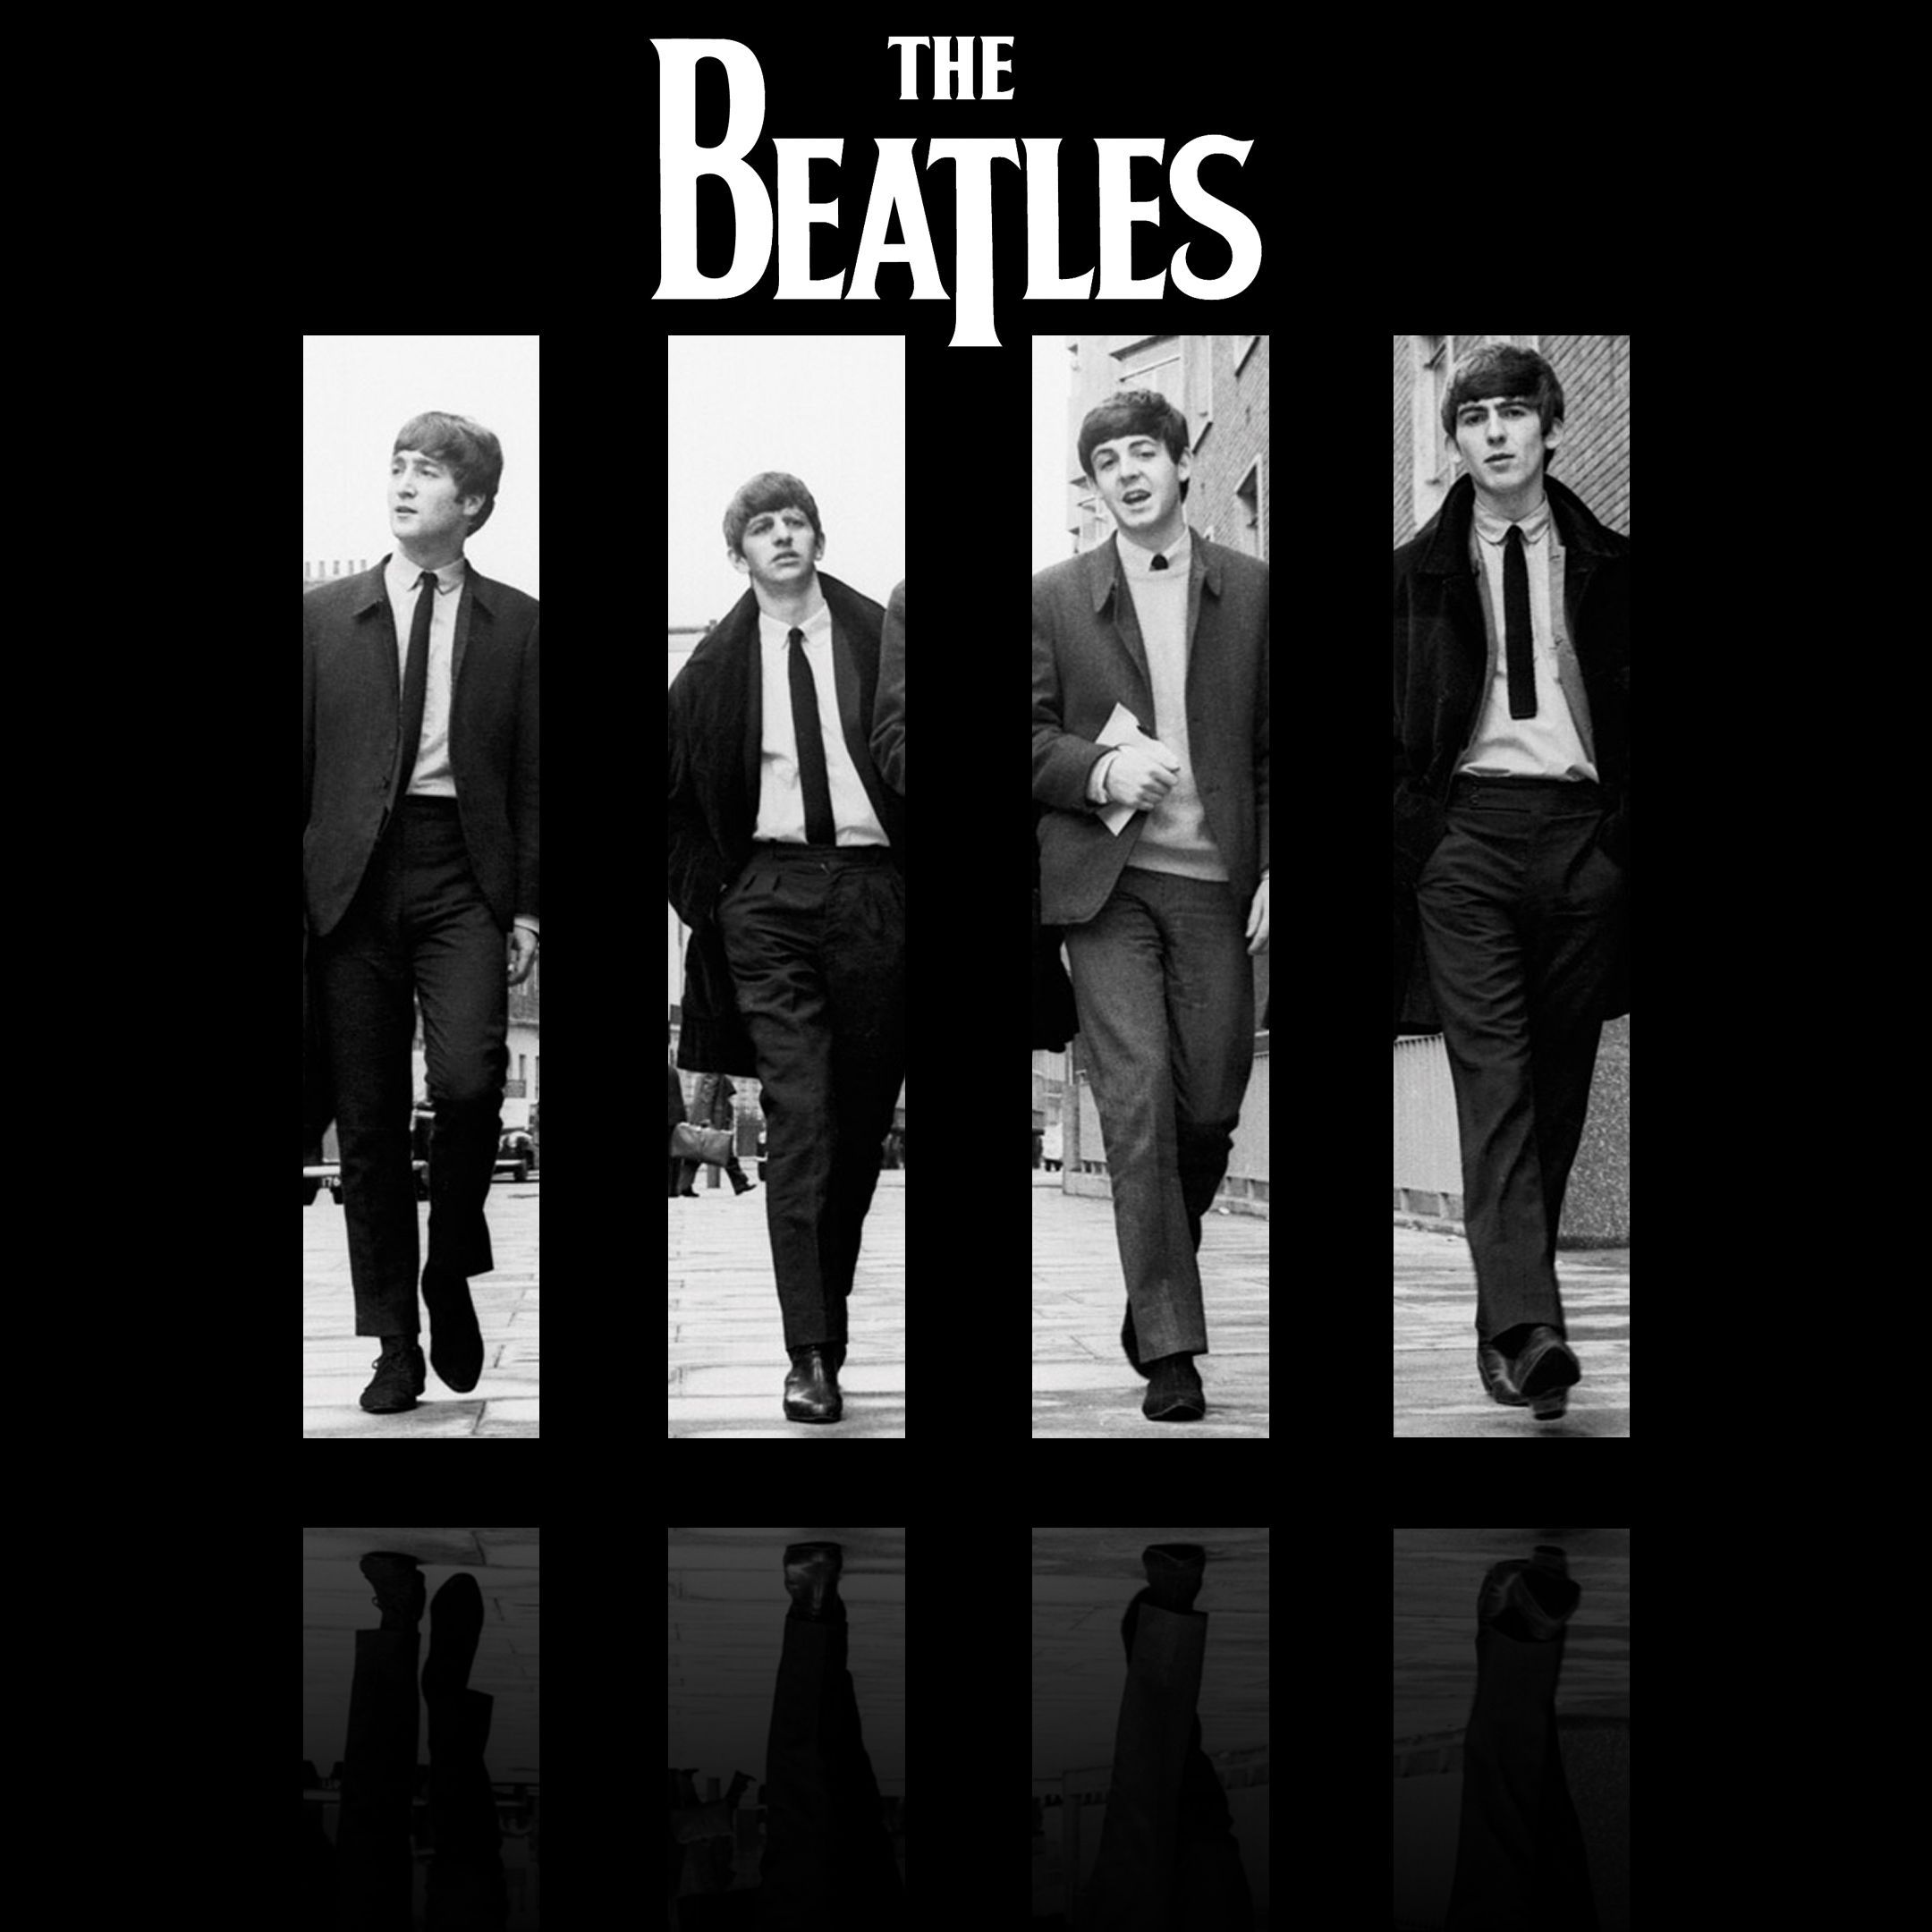 The Beatles Wallpapers HD - Wallpapernine.com